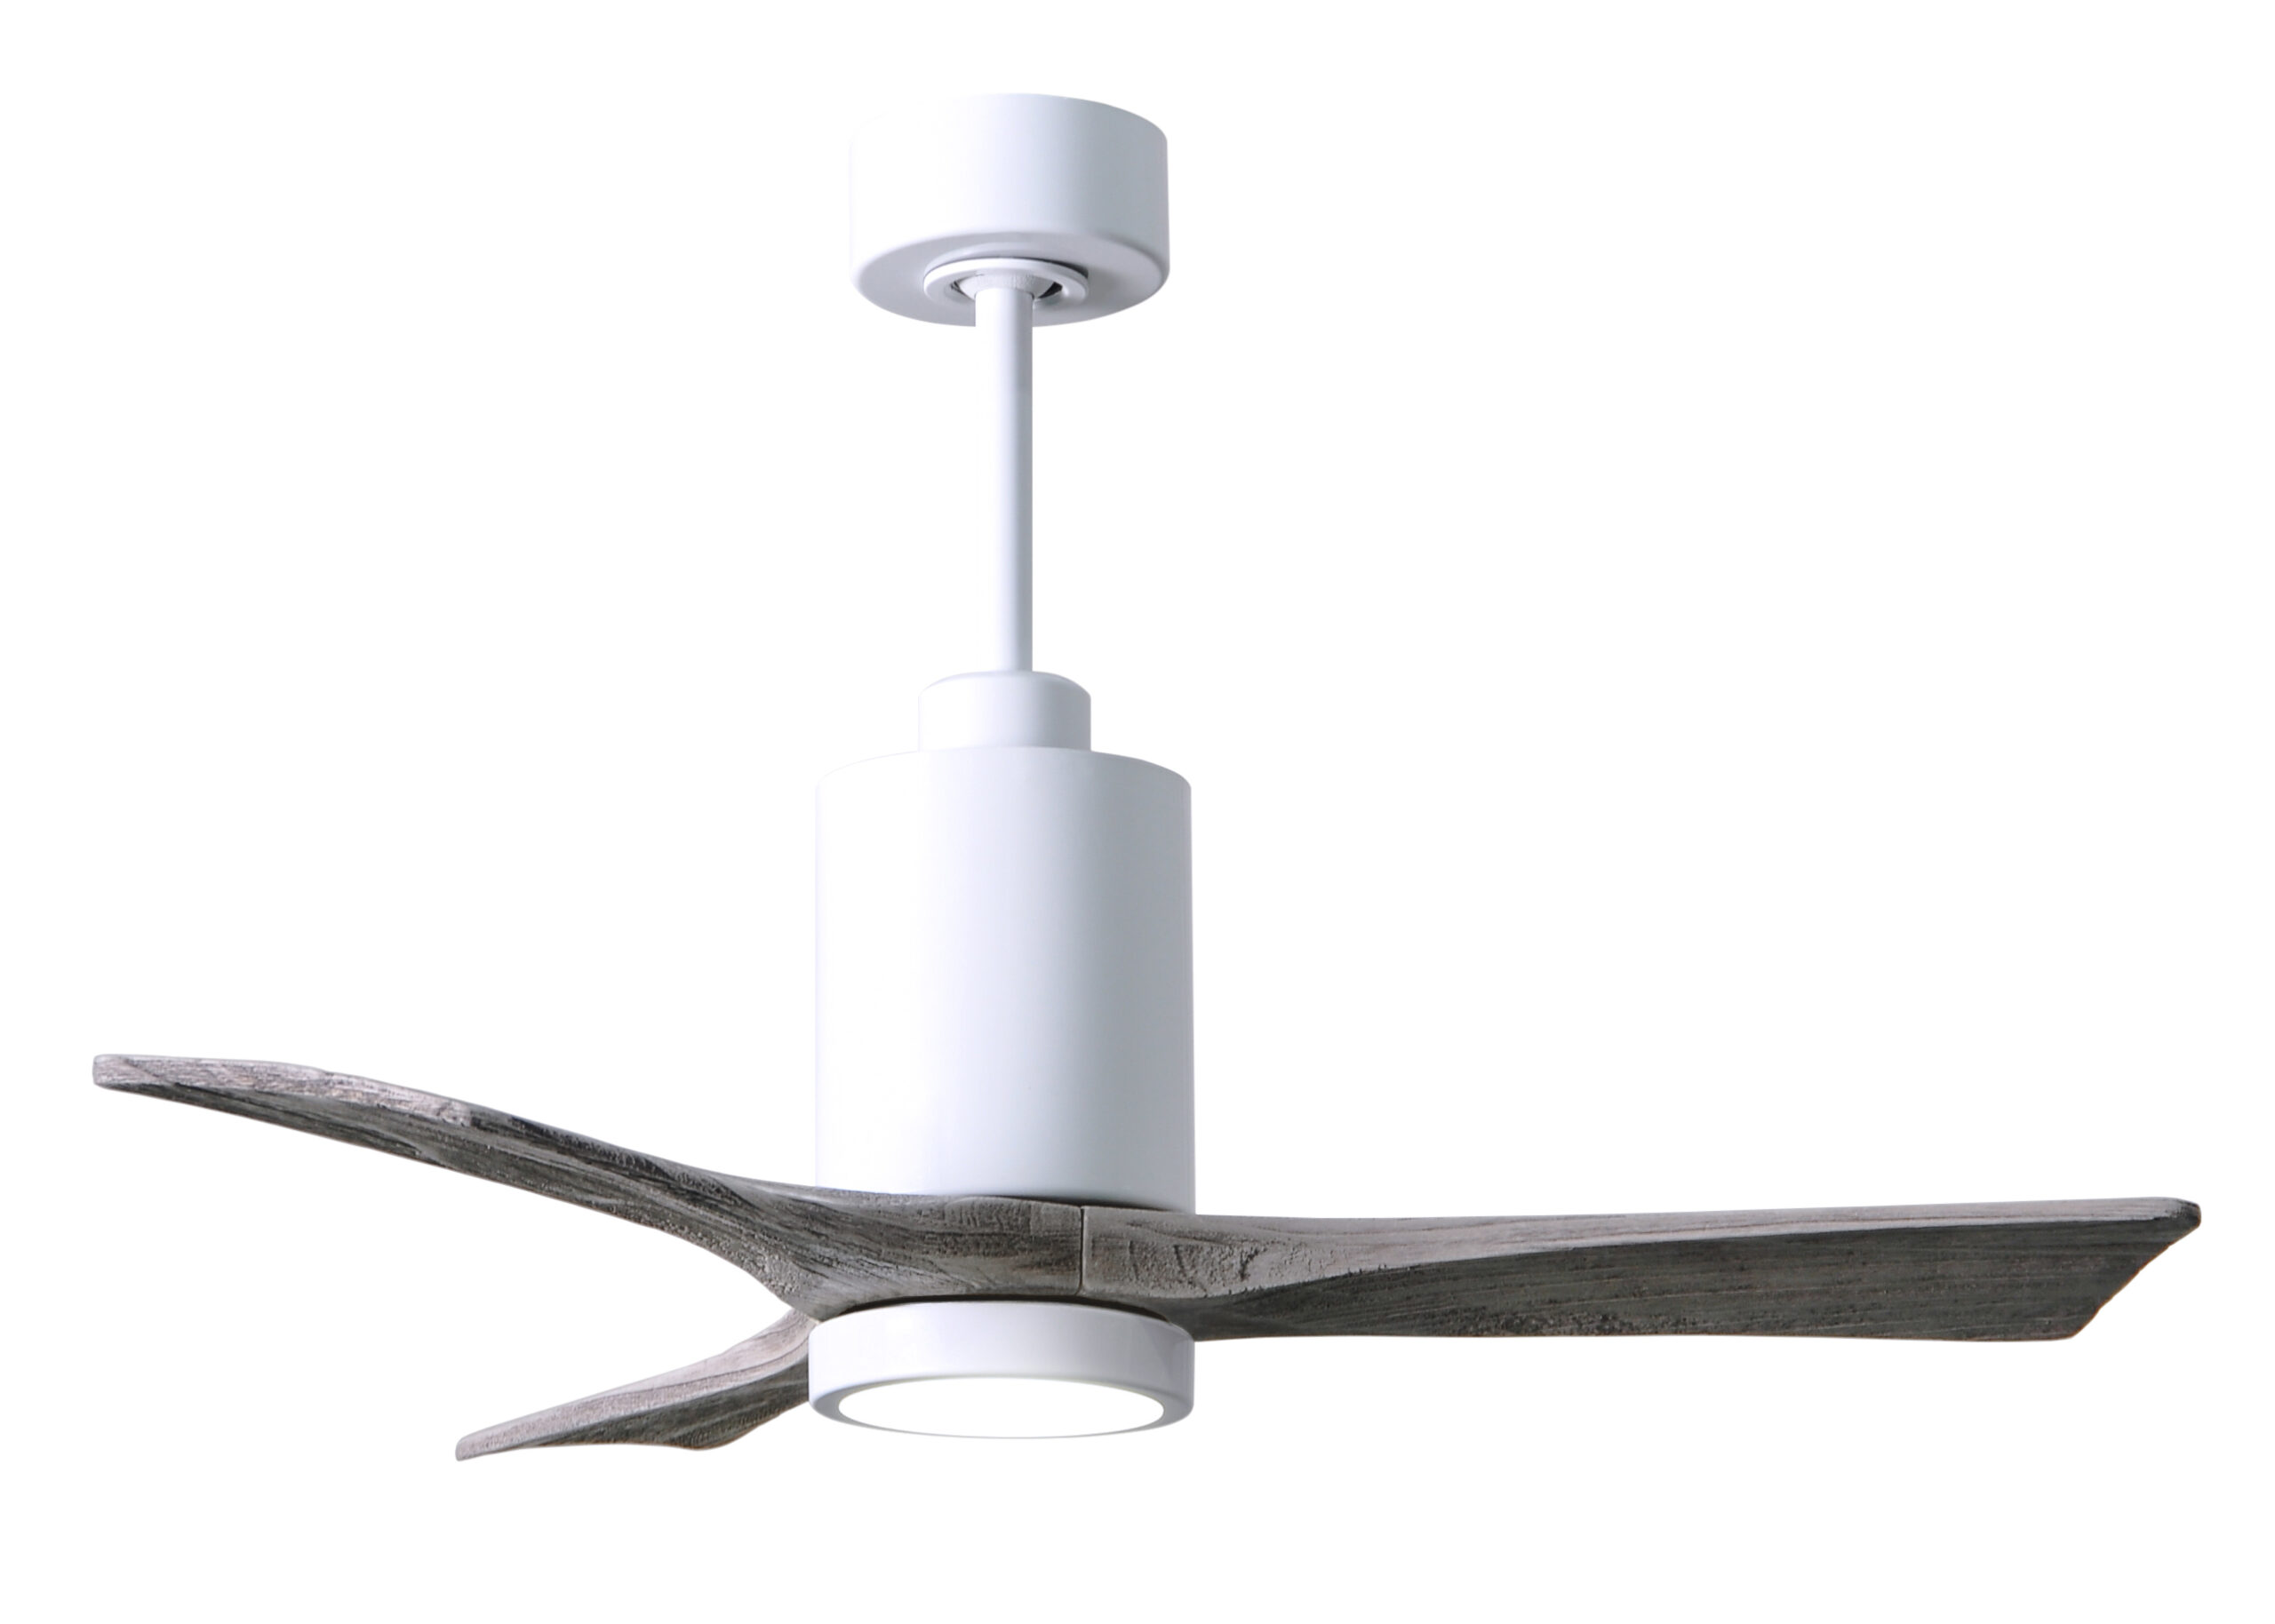 Patrícia-3 ceiling fan in Gloss White with 42” Barn Wood blades made by Matthews Fan Company.